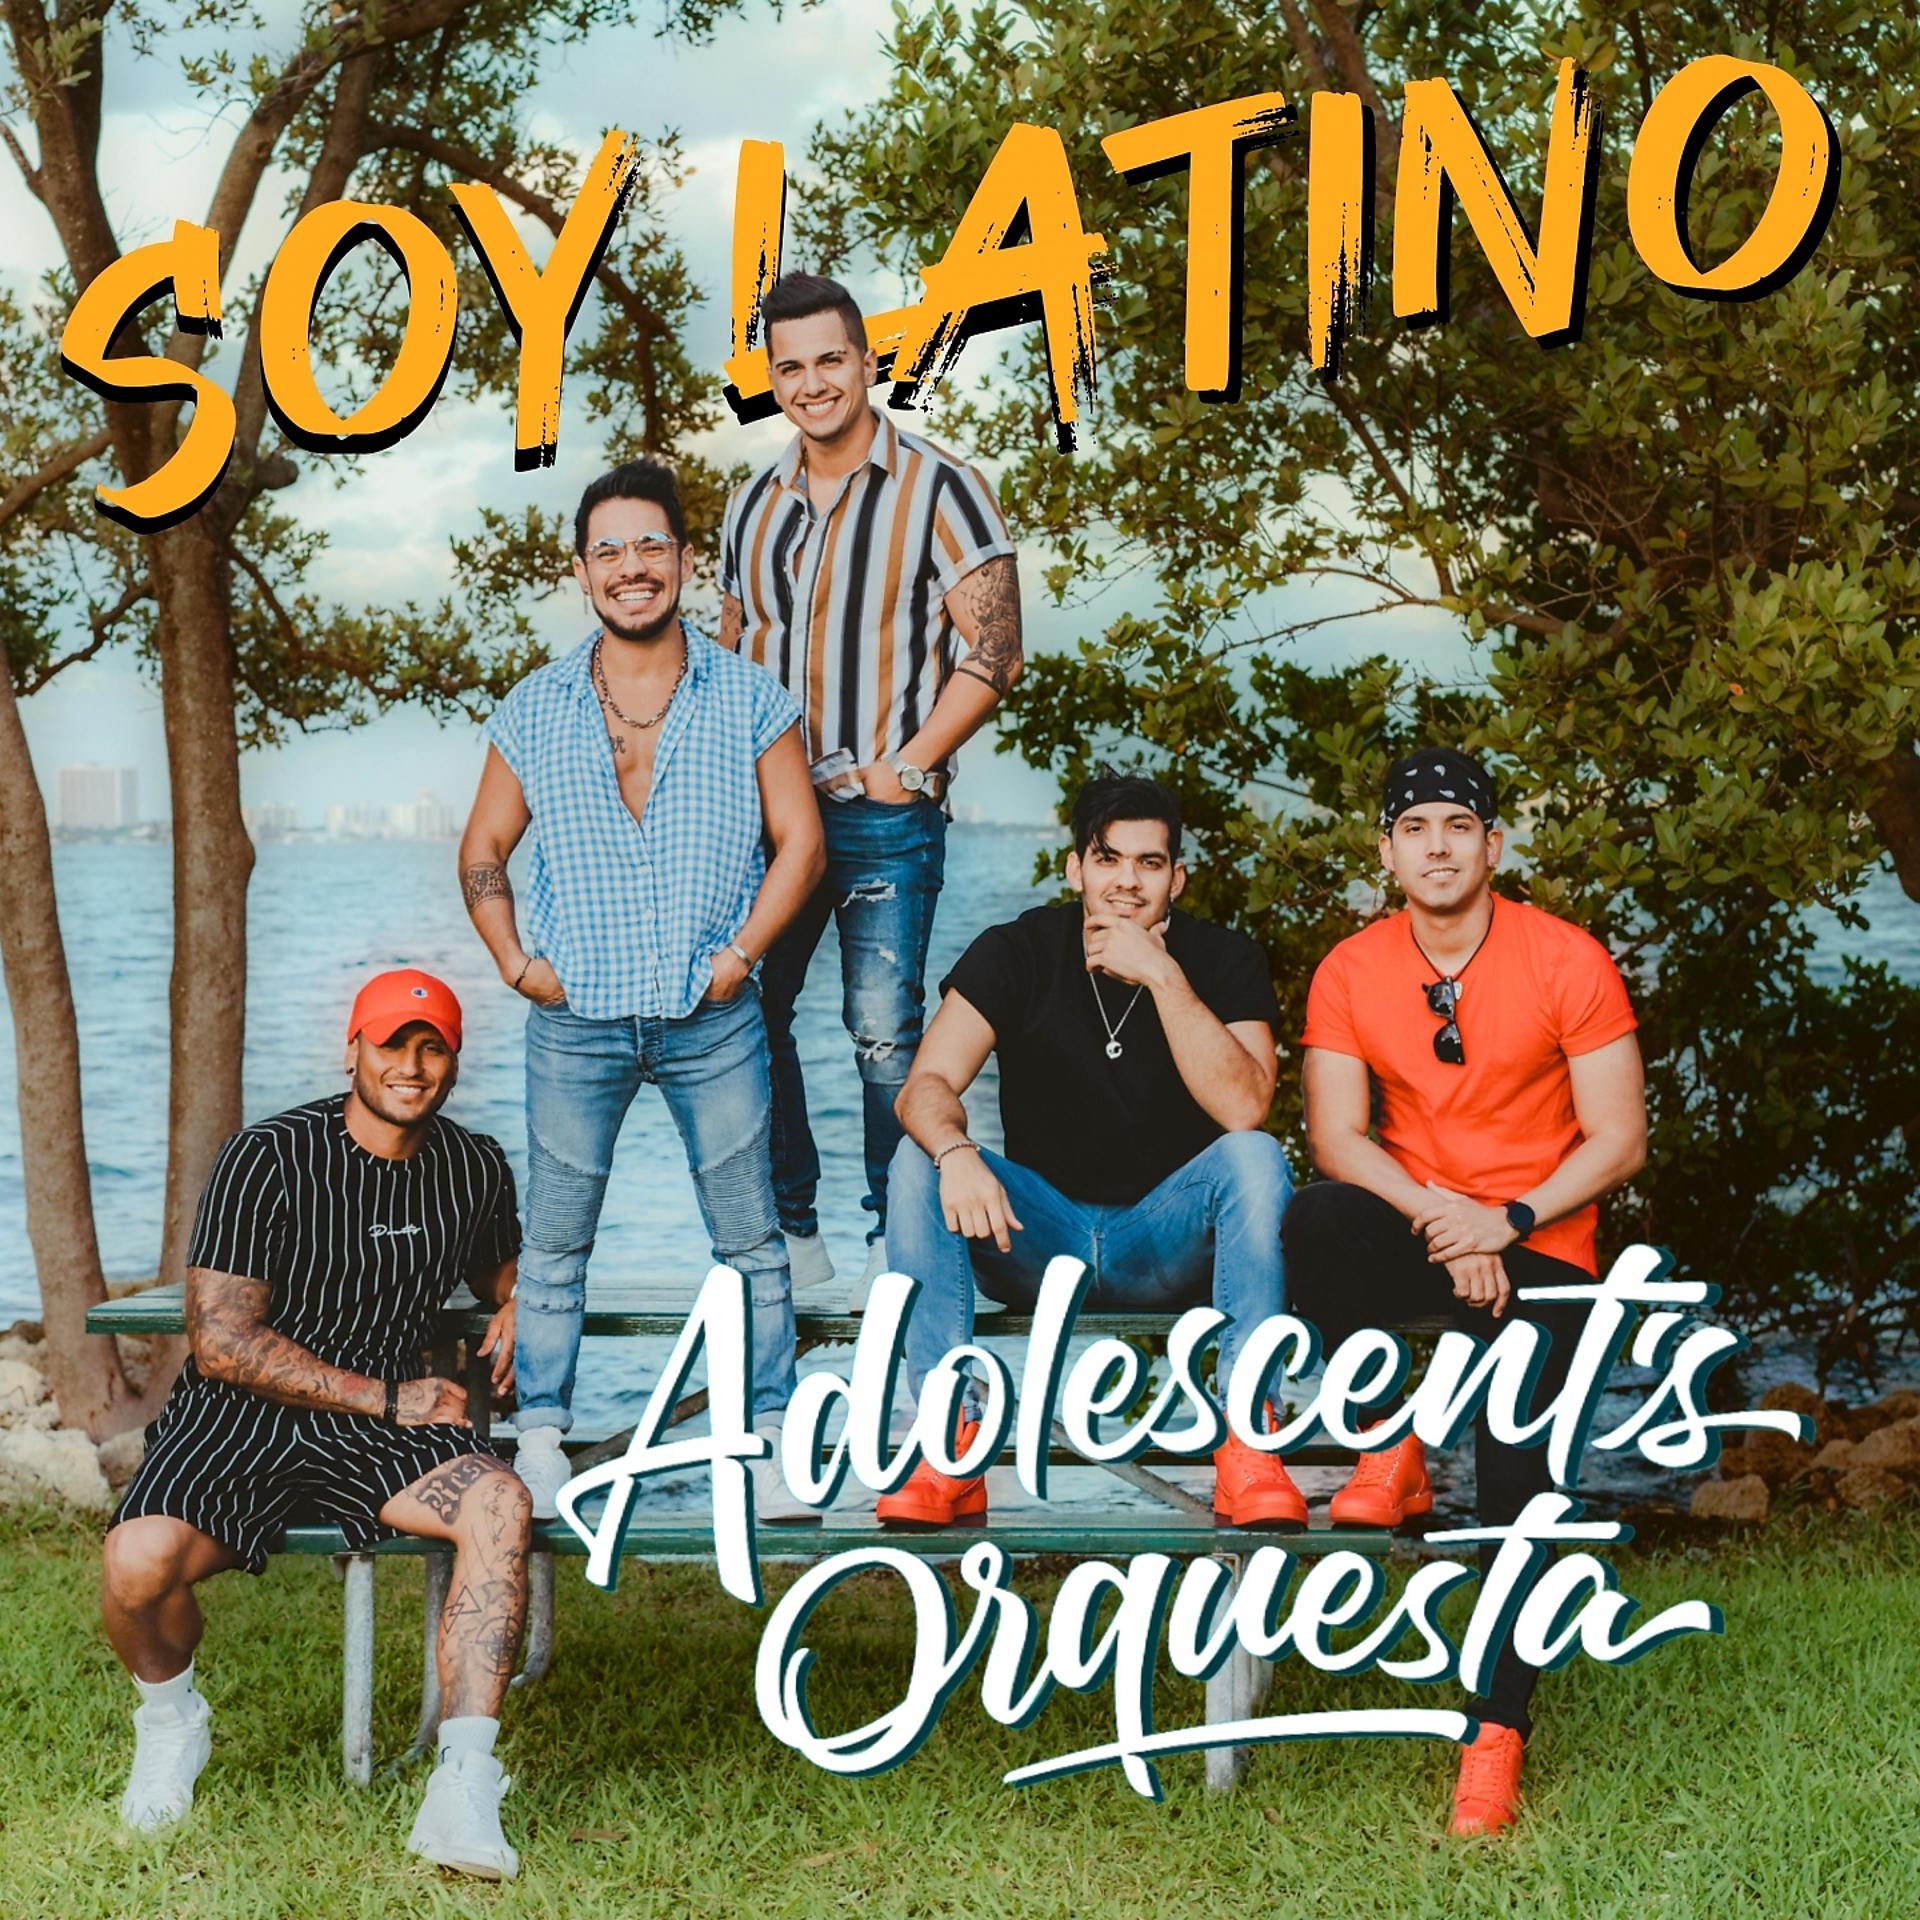 Постер альбома Soy Latino